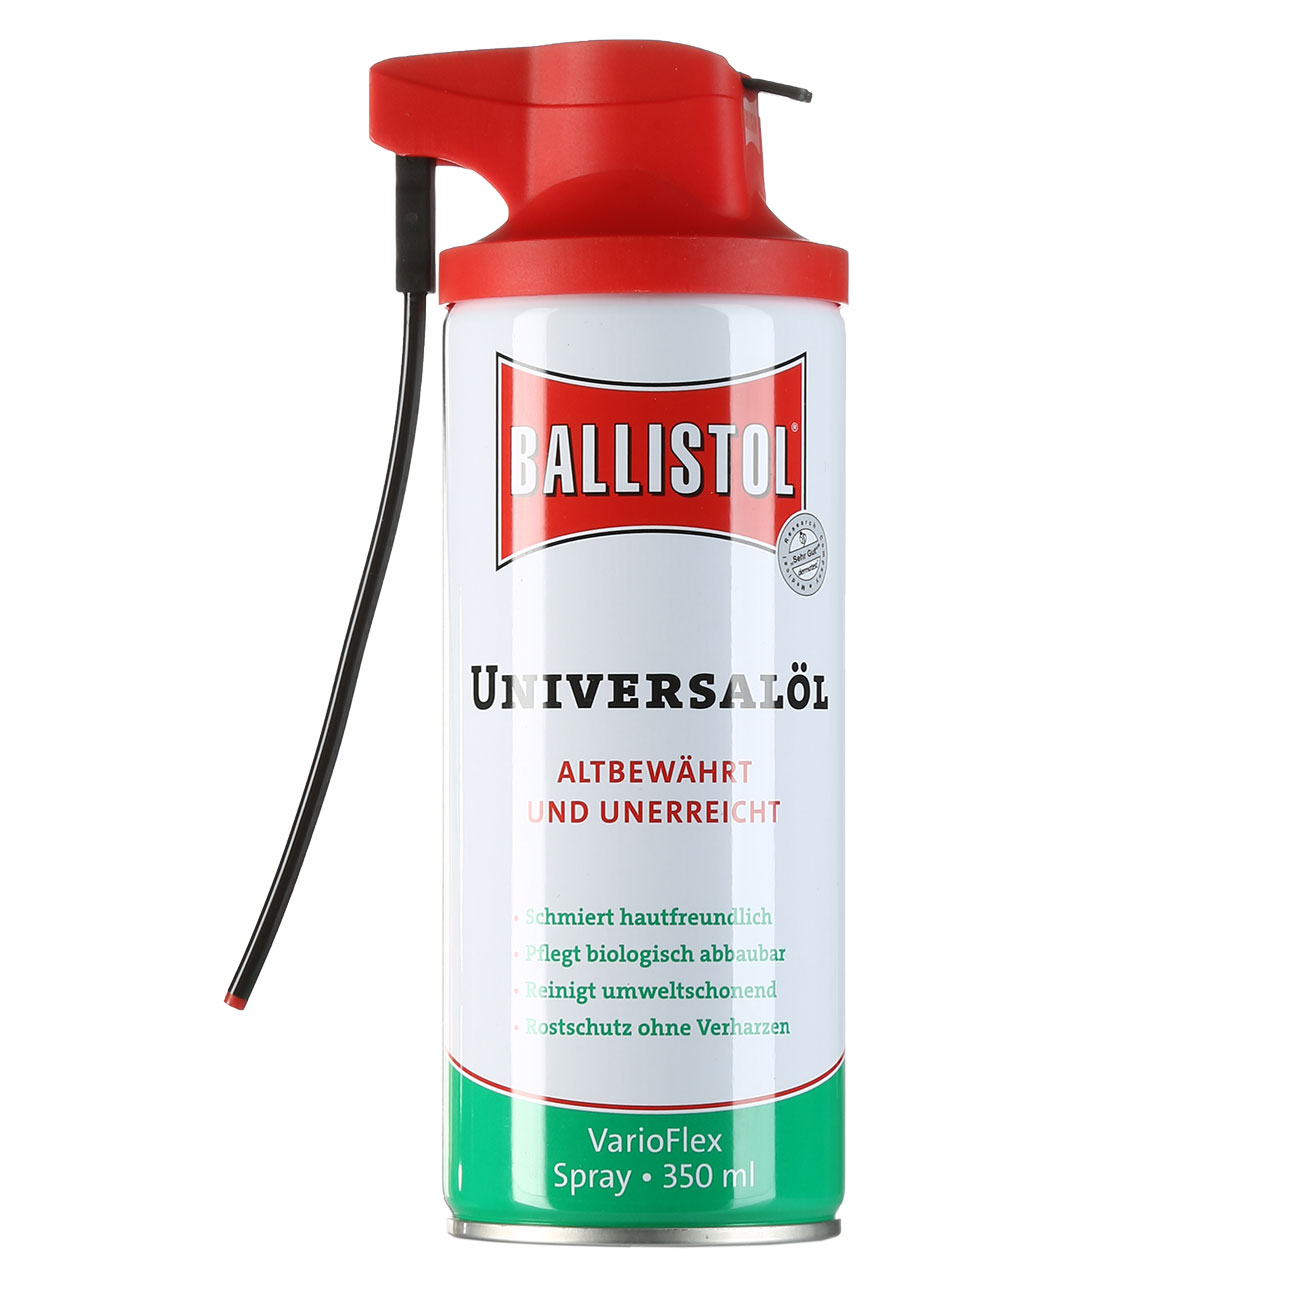 Universal Oil VarioFlex Spray 350 ml - BALLISTOL